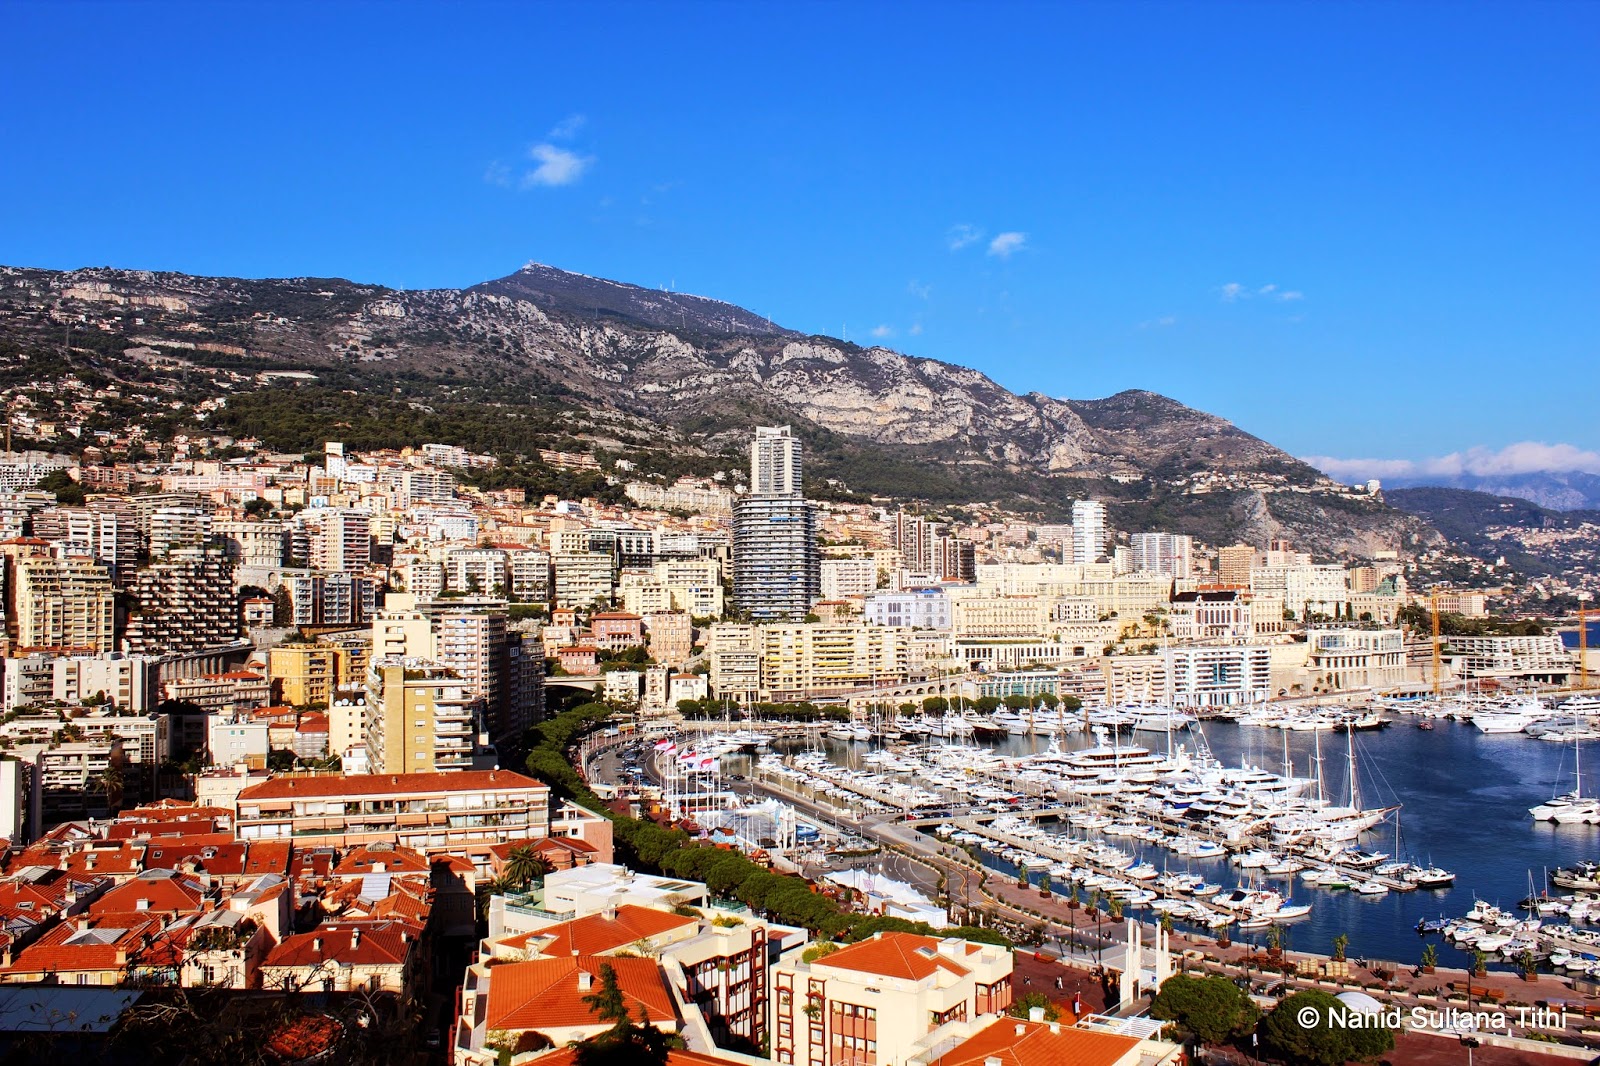 Monaco - Looking over serene Mediterranean